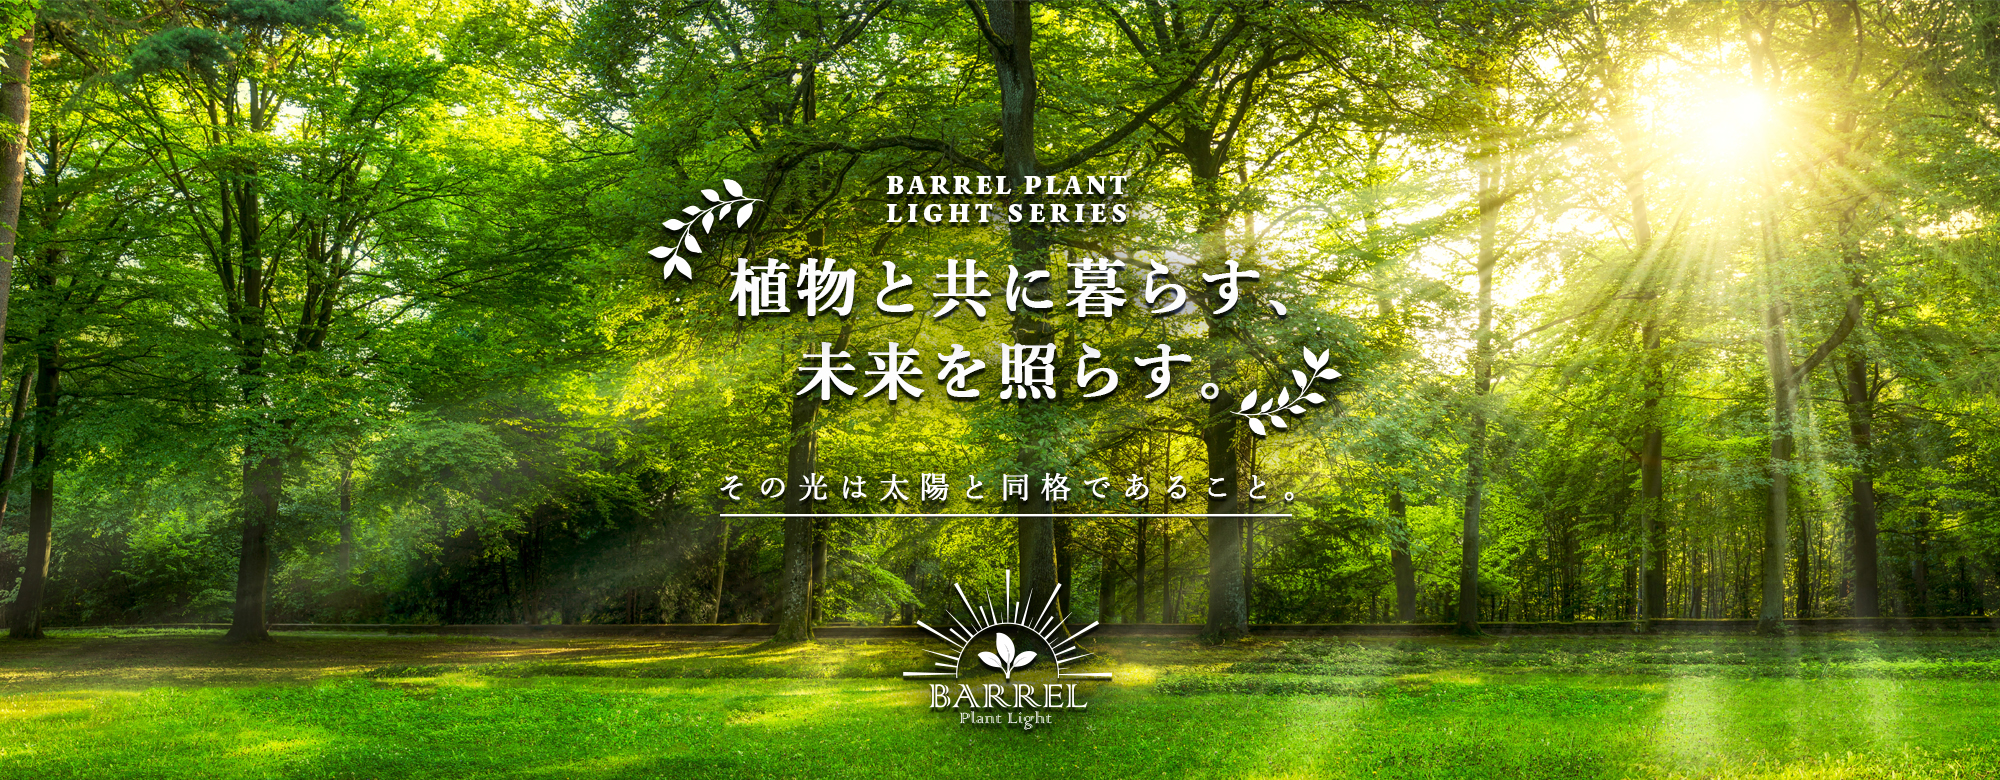 BARREL 公式サイト |